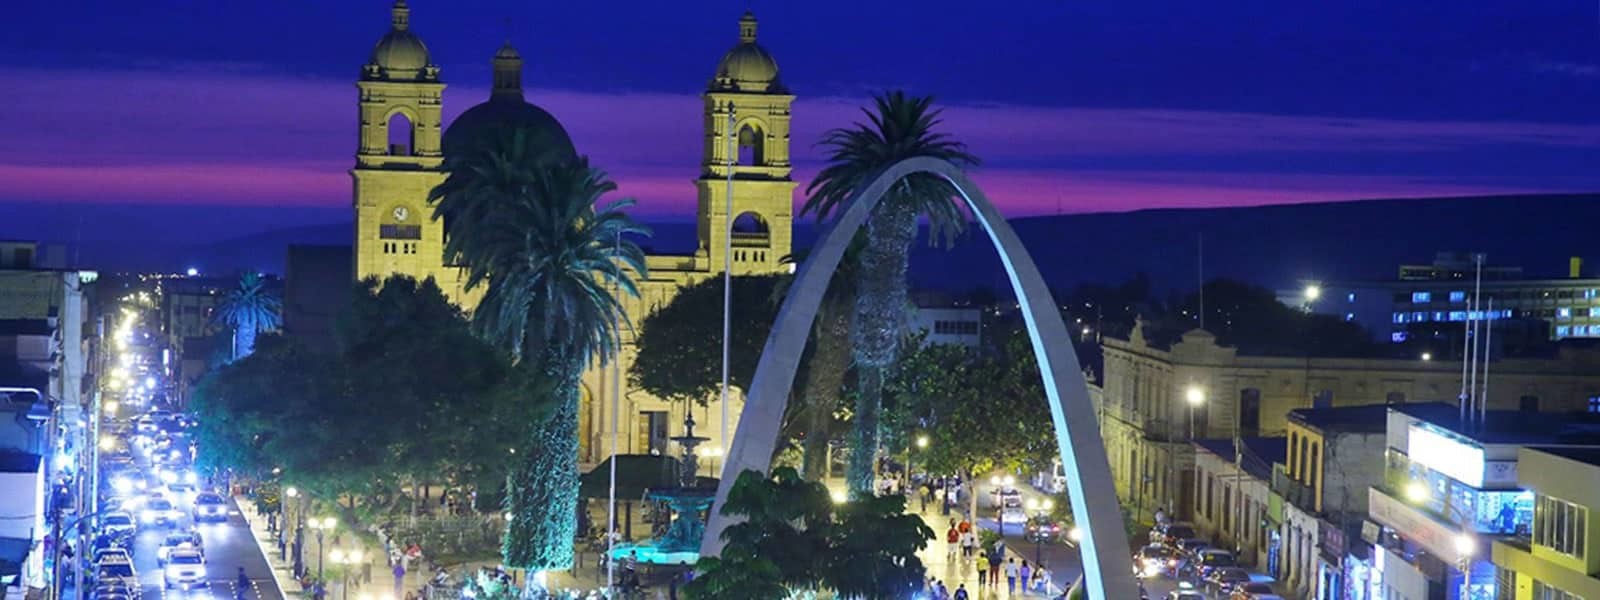 Plaza de la ciudad de Tacna